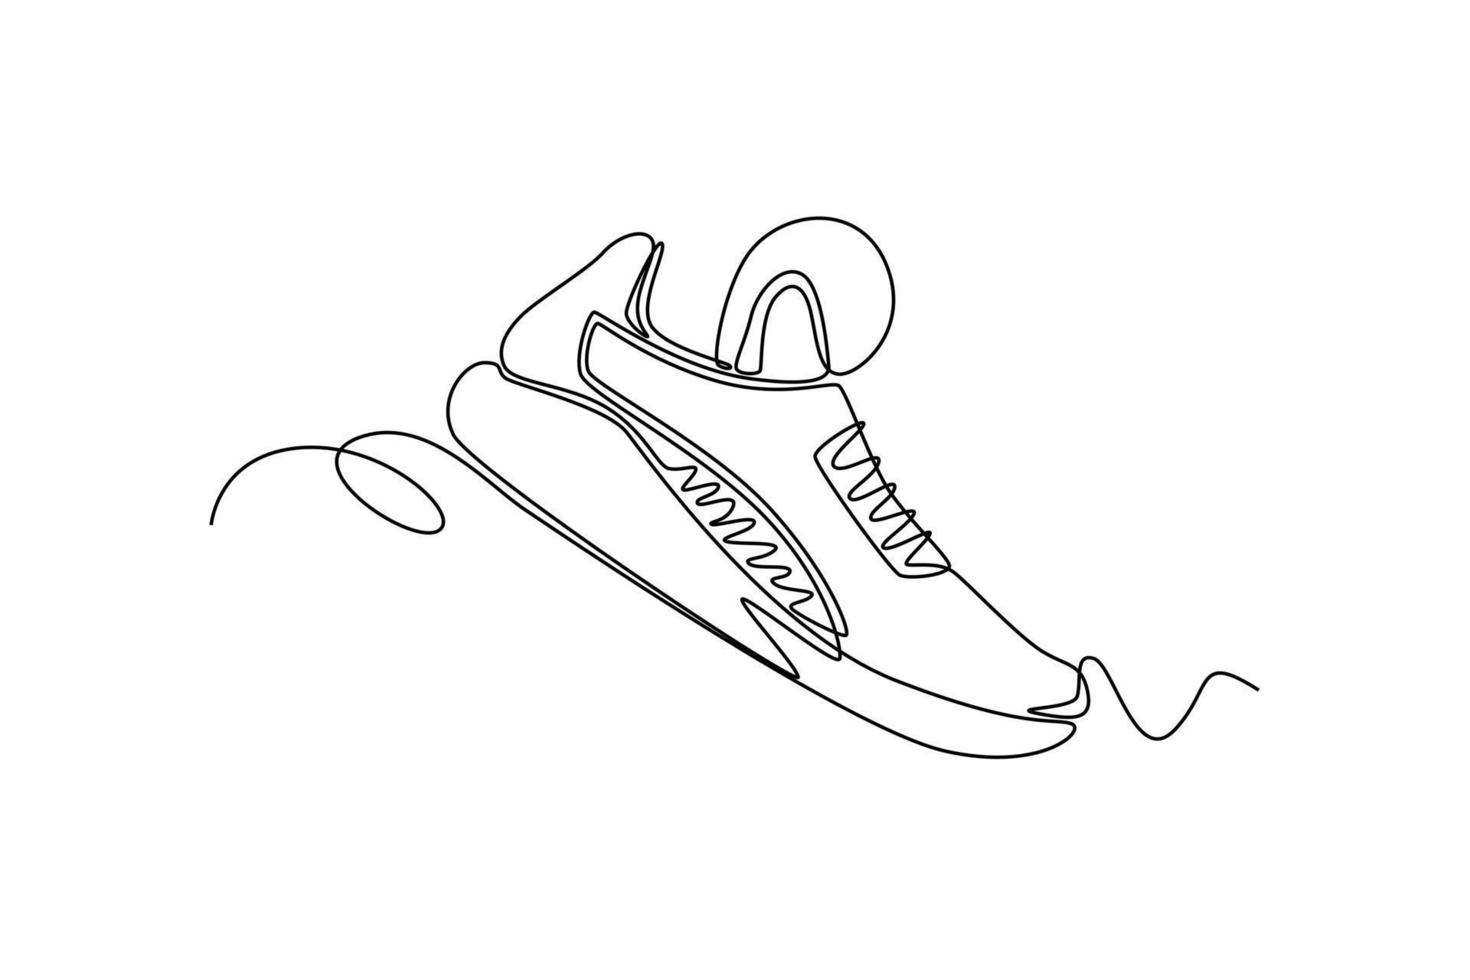 kontinuerlig ett linje teckning sport skor. kondition Utrustning begrepp. enda linje dra design vektor grafisk illustration.